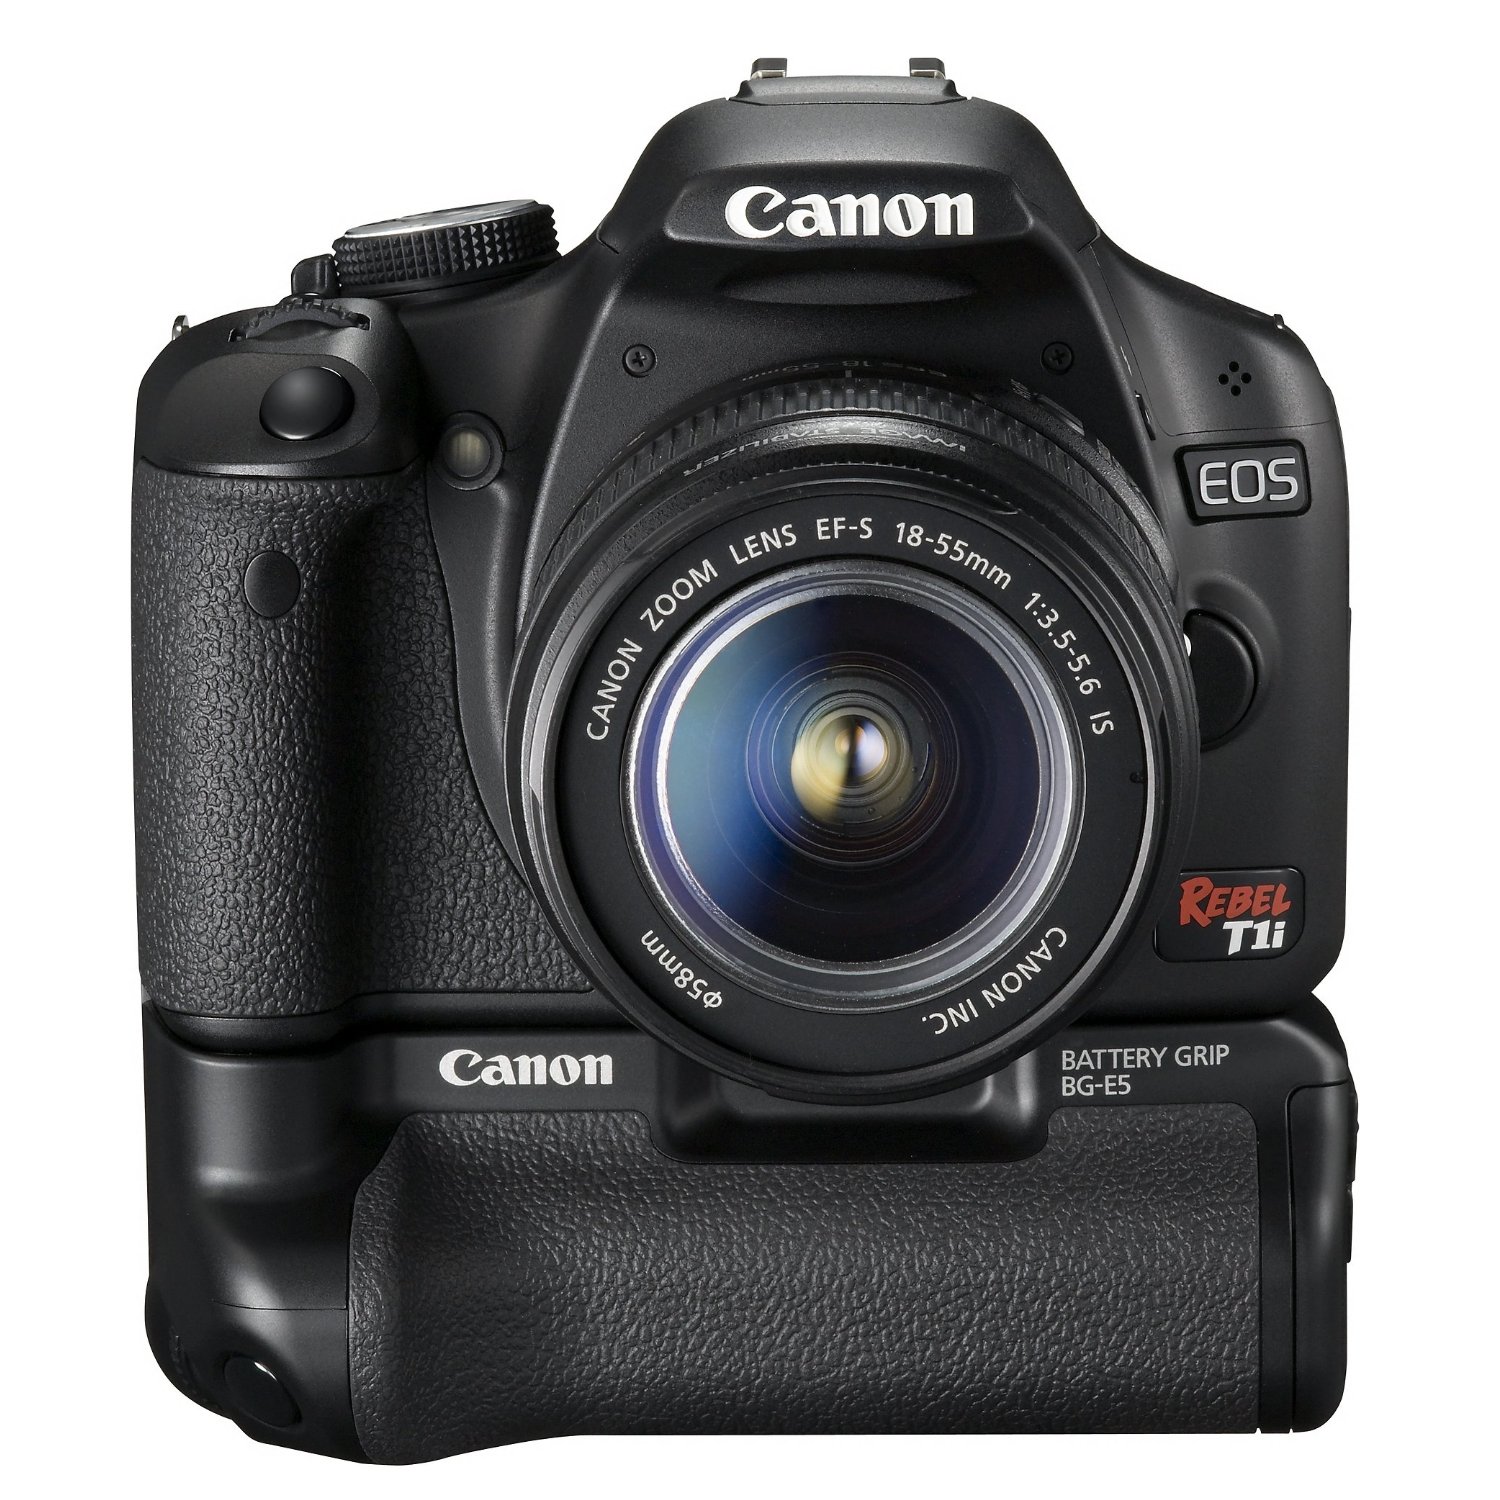 Double clicks: Canon EOS Rebel T1i 15.1 MP CMOS Digital SLR Camera with